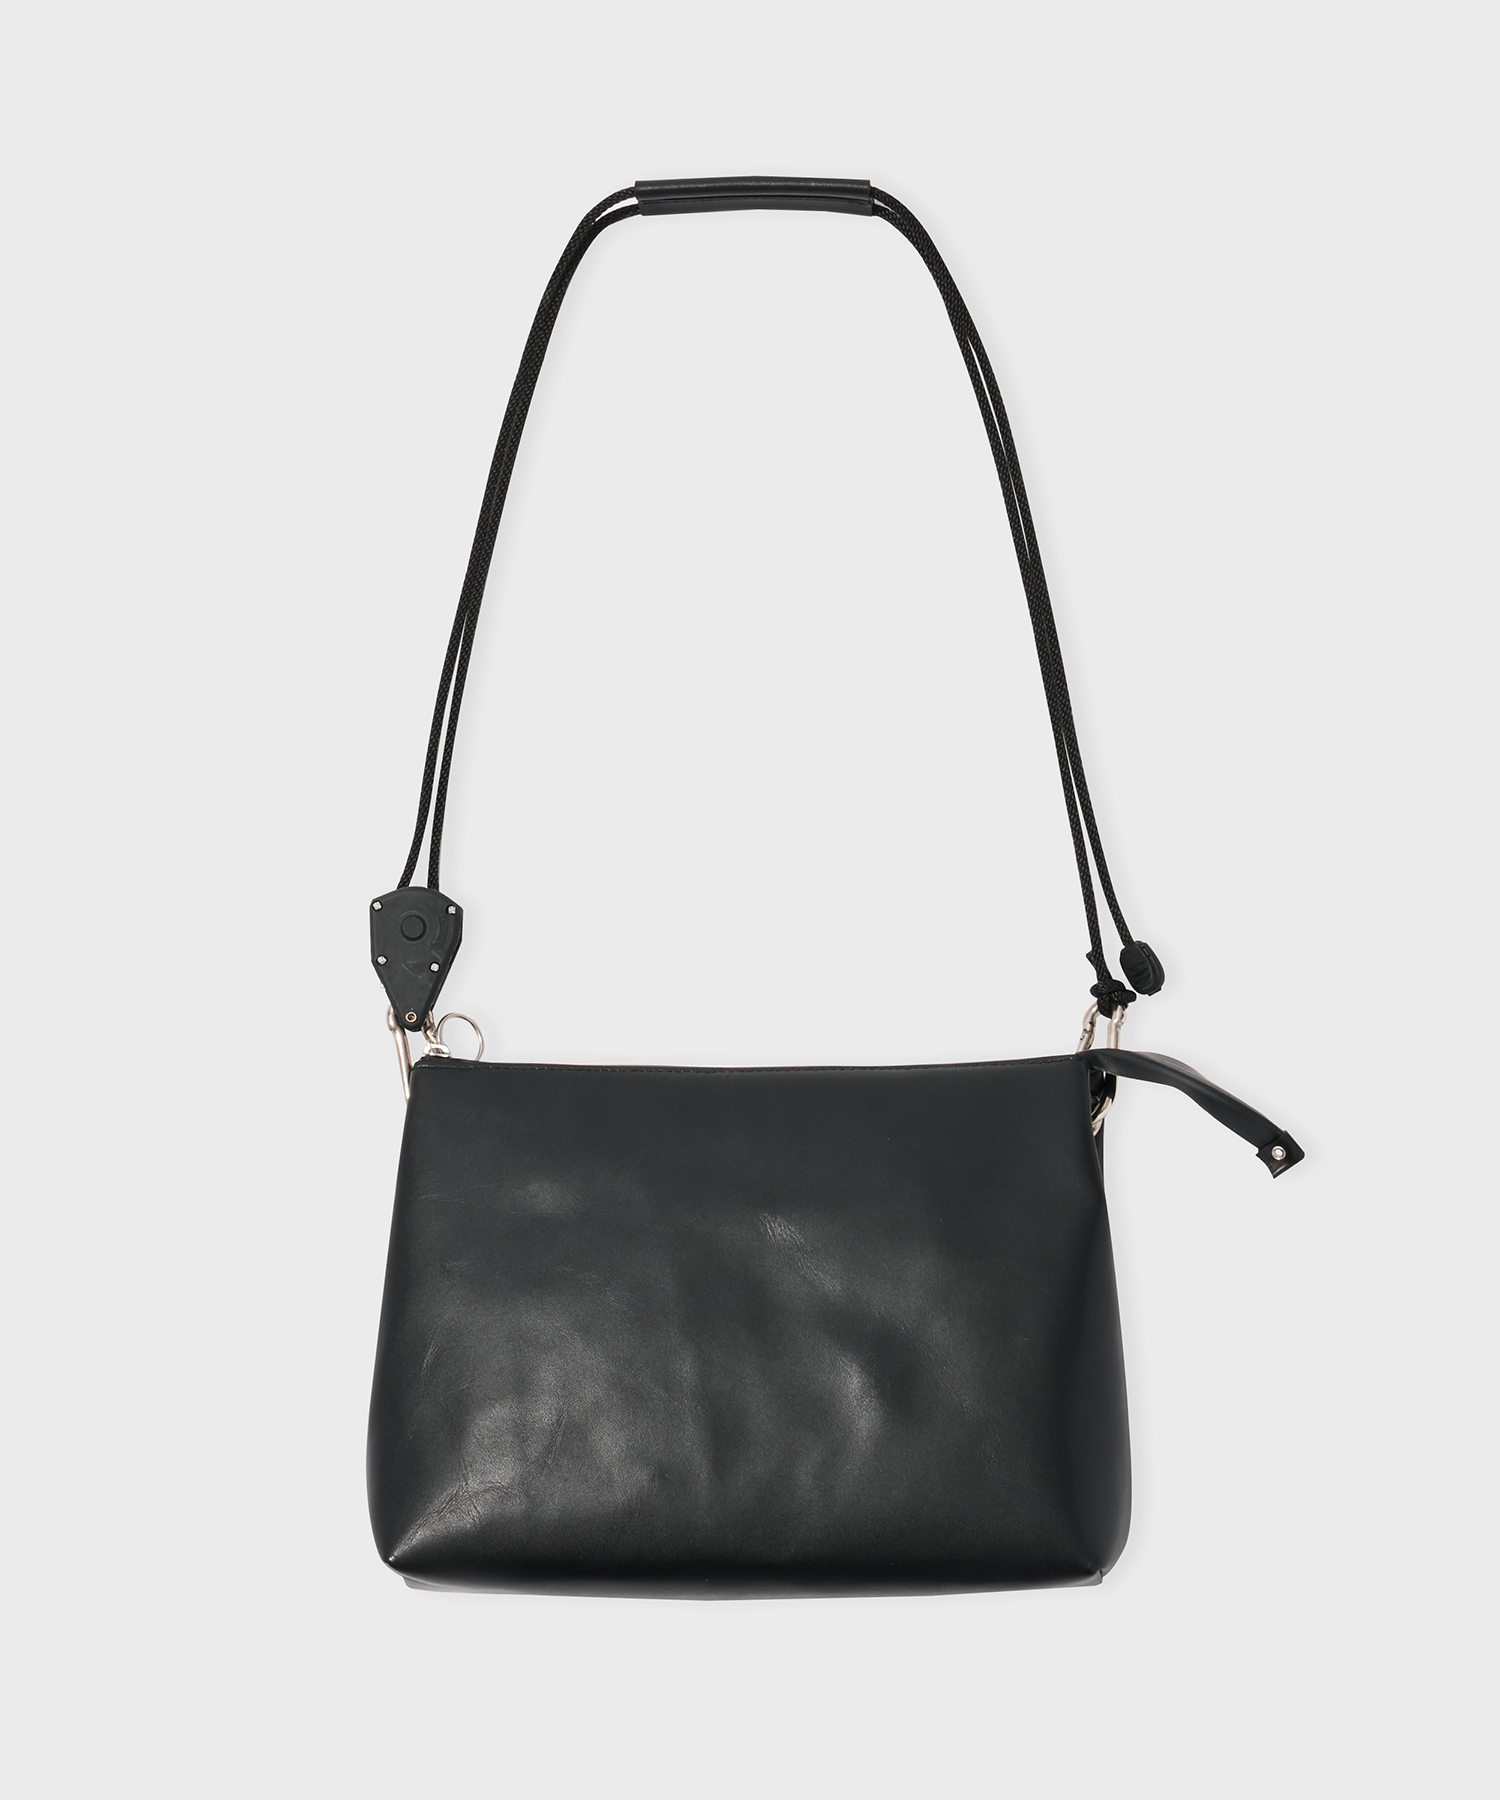 PAWL Ratchet Bag / Water Repellent Leather (Black)